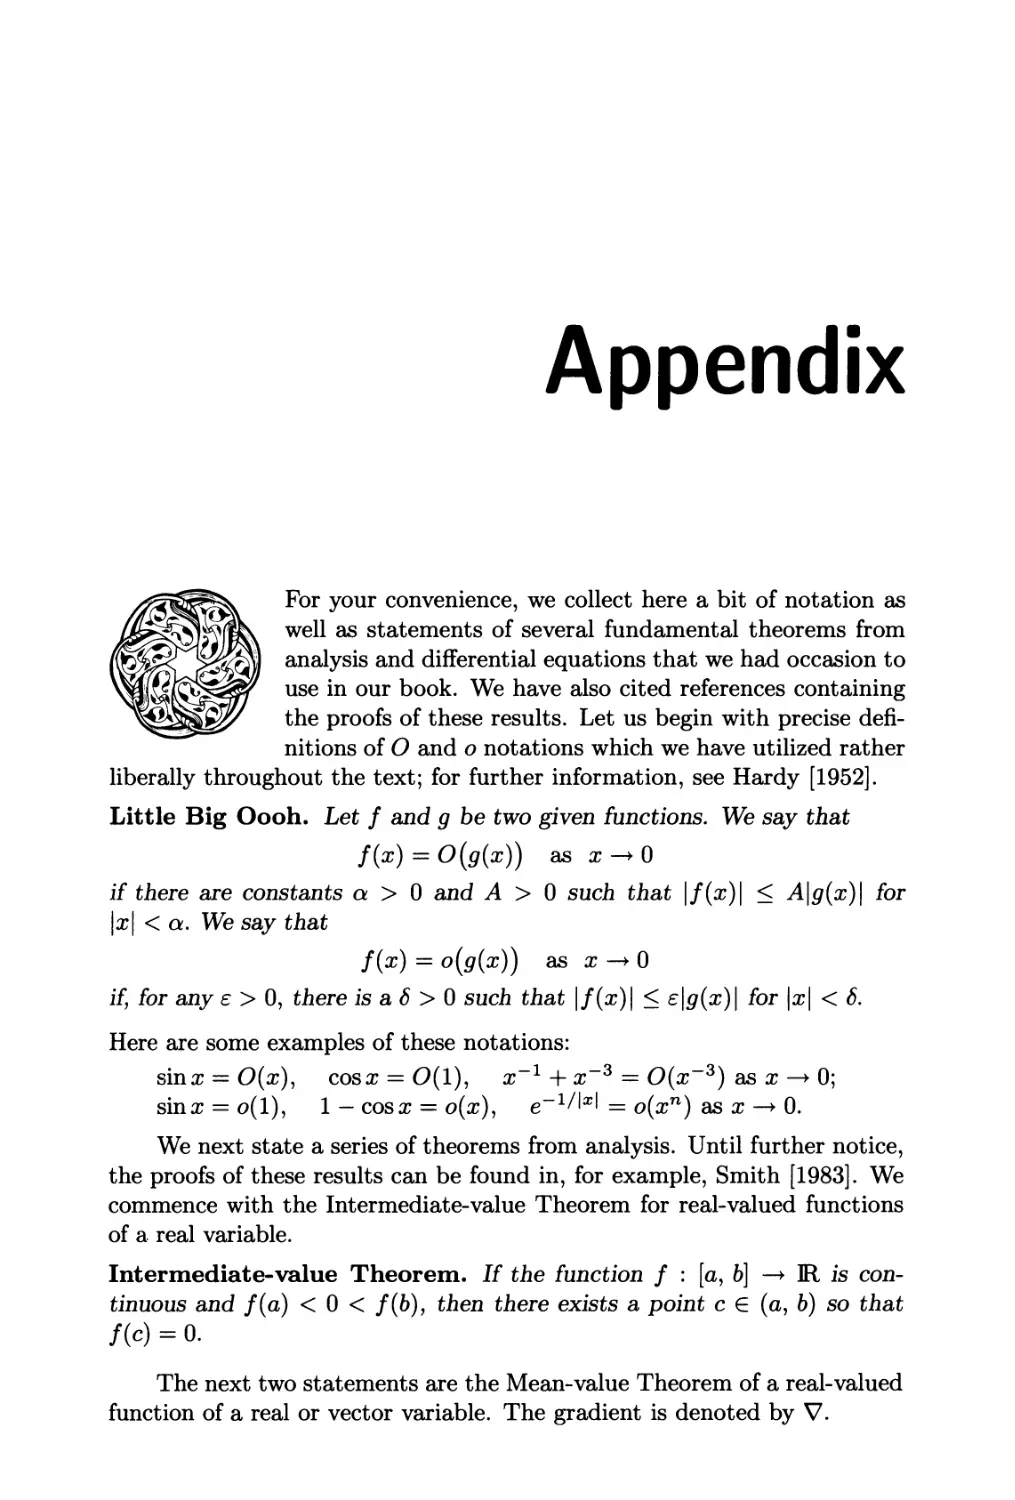 APPENDIX: A Catalogue of Fundamental Theorems